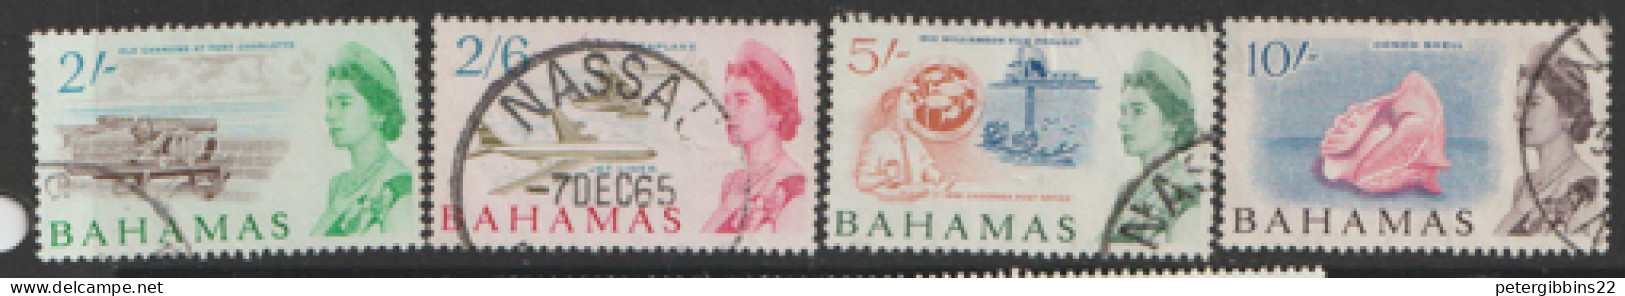 Bahamas 1965  SG 257-60  Fine Used - 1963-1973 Interne Autonomie